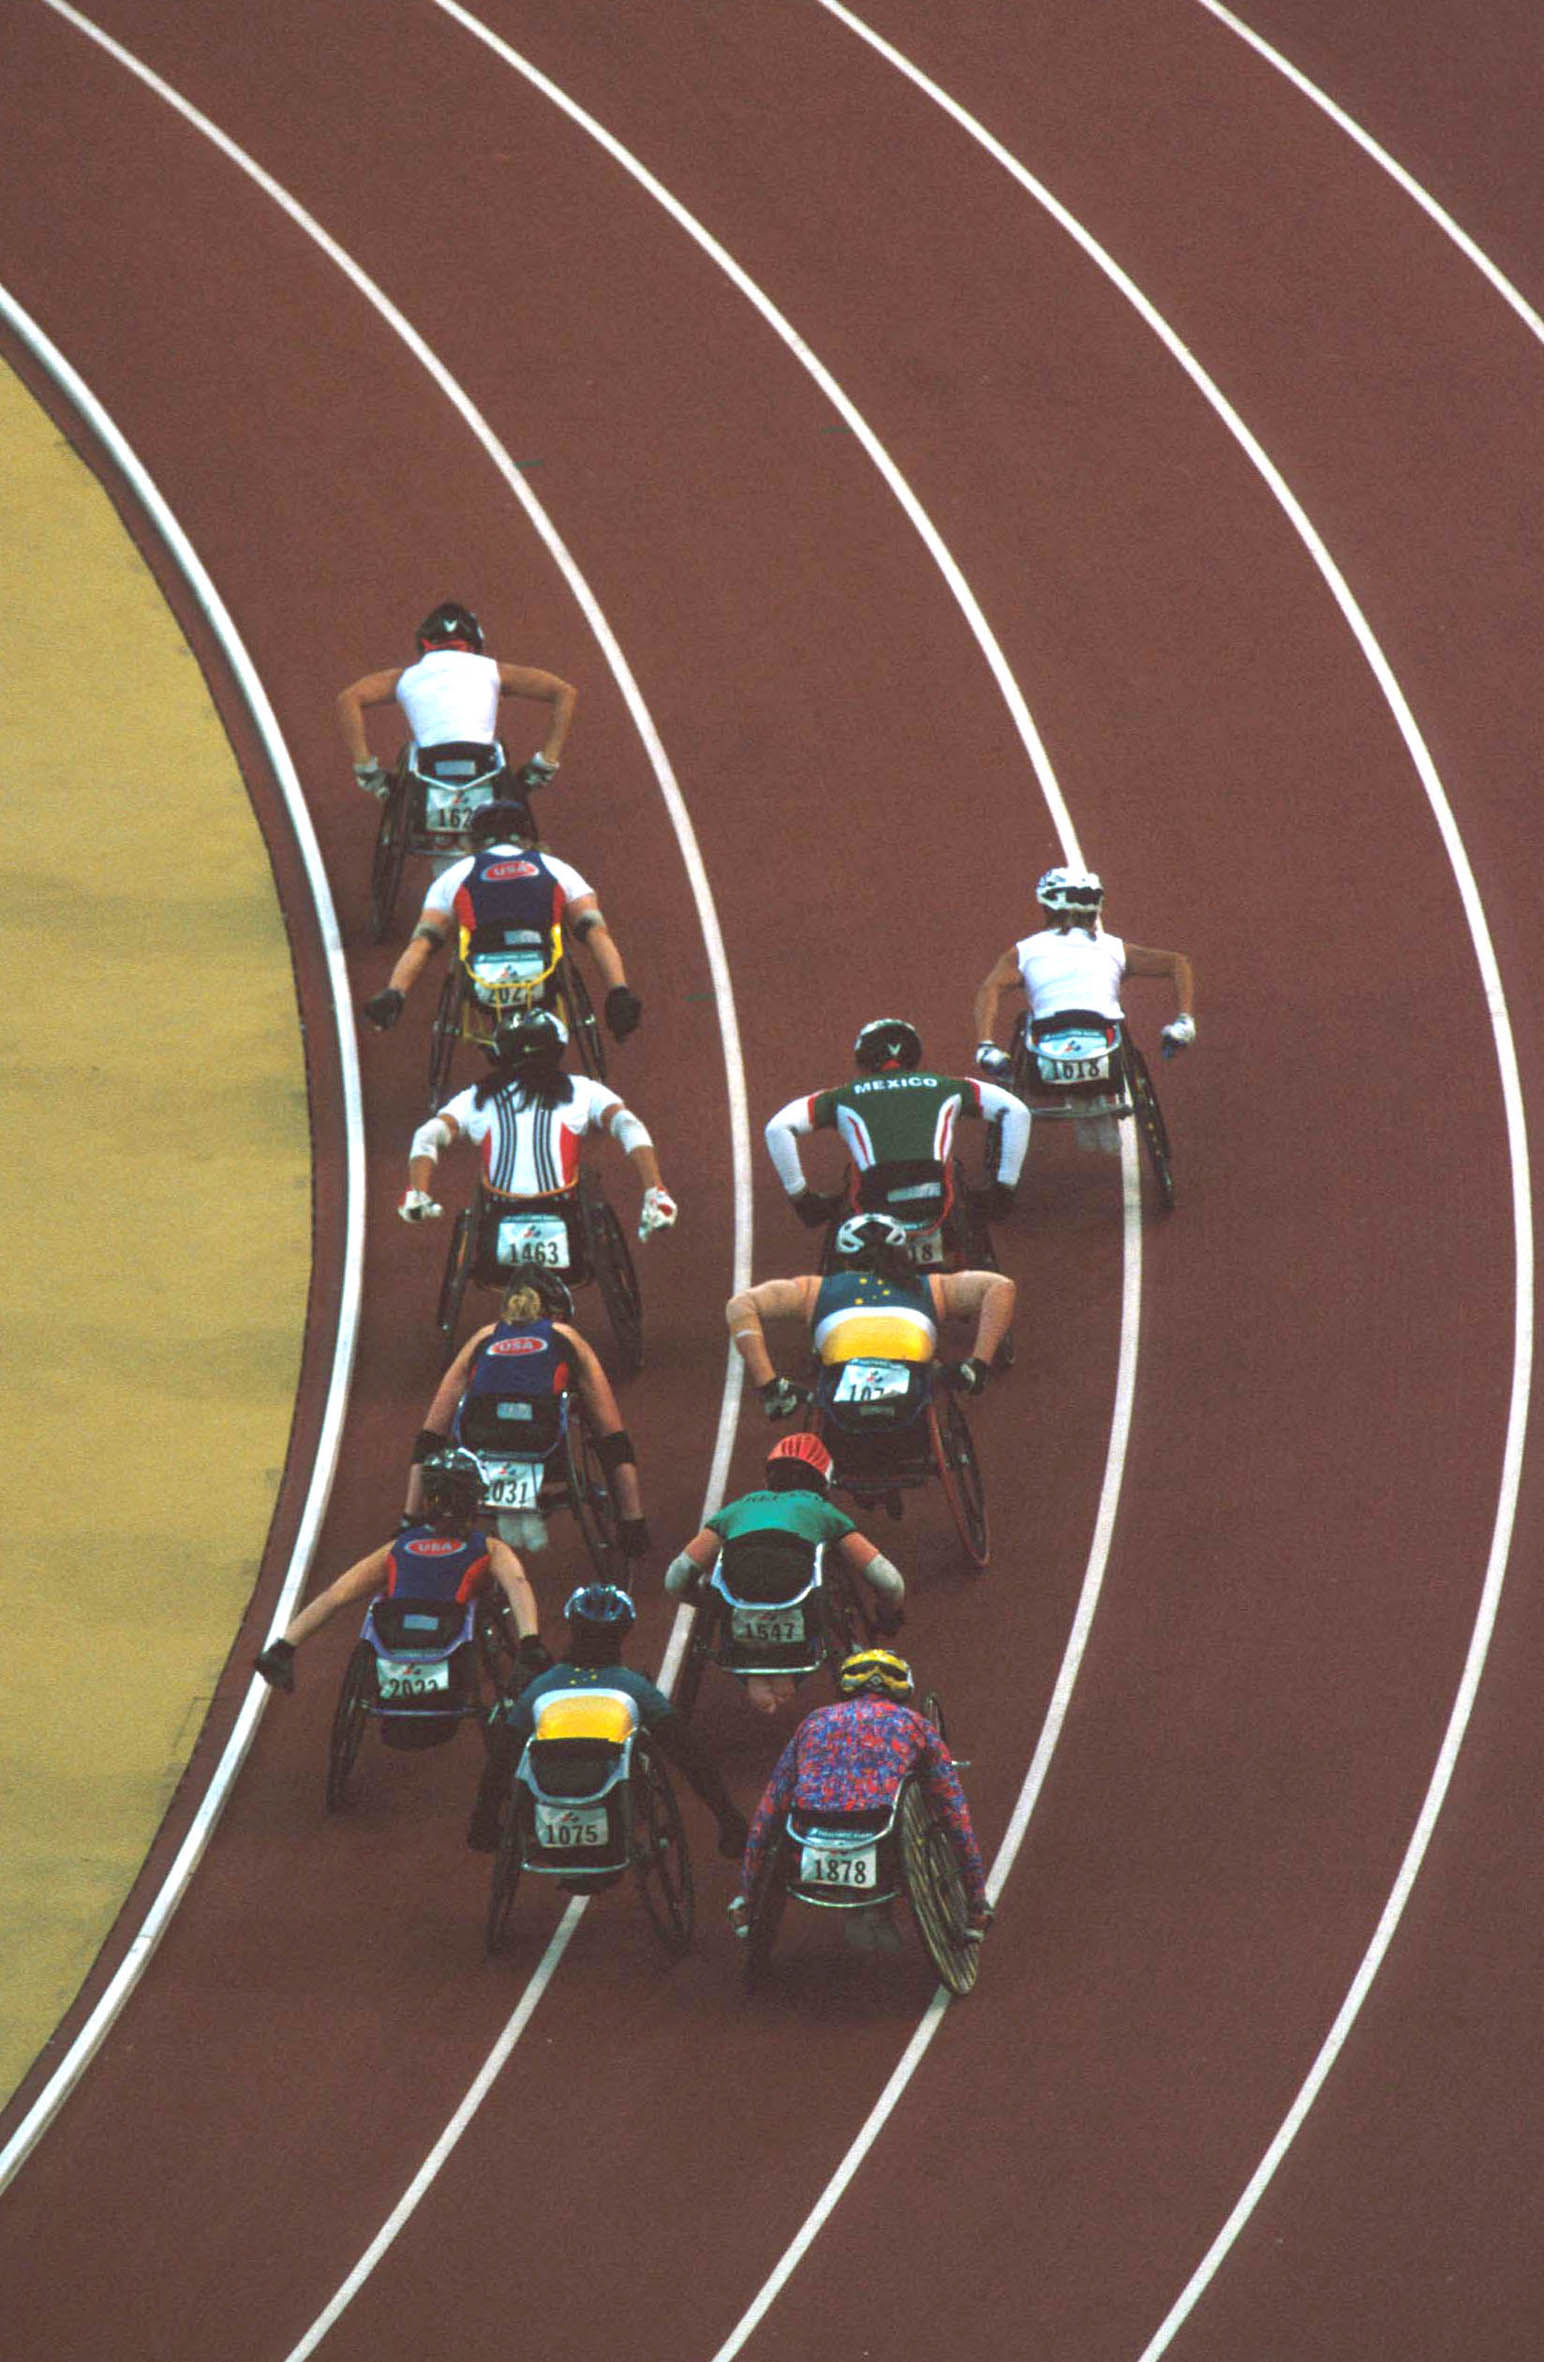 141100_-_Athletics_wheelchair_racing_racers_from_above_2_-_3b_-_2000_Sydney_race_photo.jpg